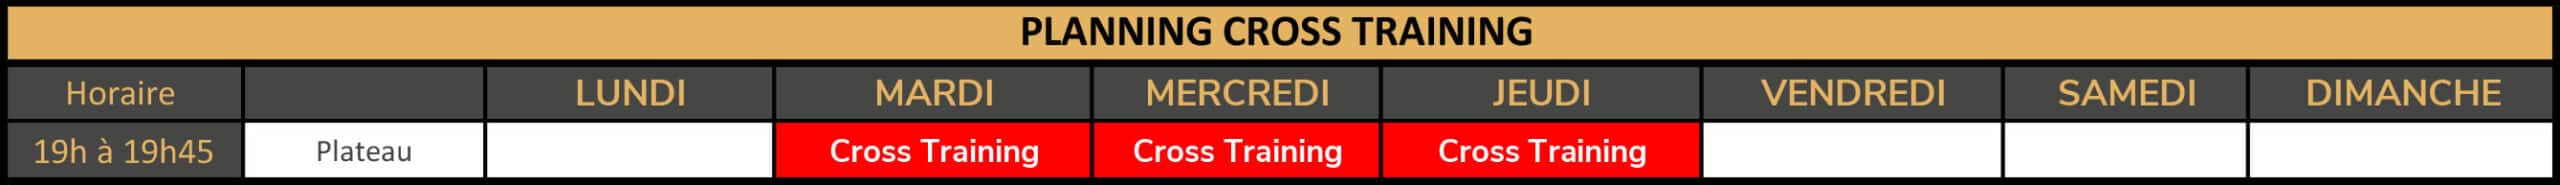 Planning Cross Training - 2022